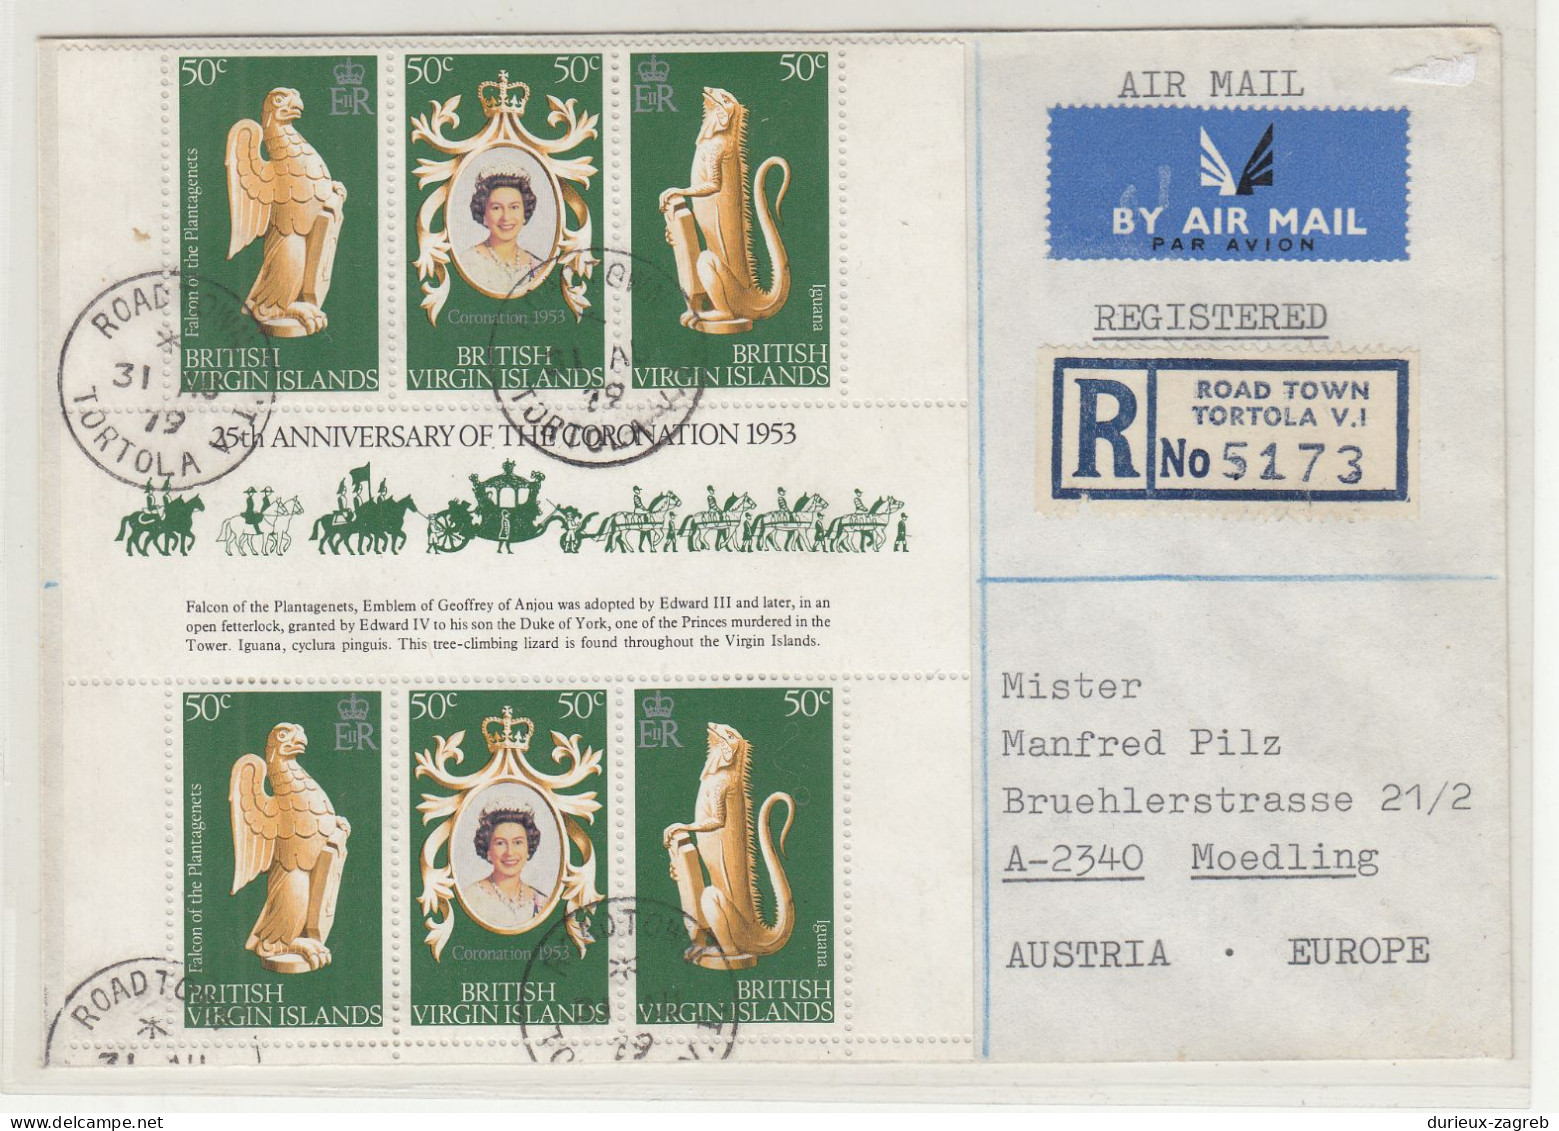 British Virgin Islands Letter Cover Posted Registered 1979 Road Town Tortola To Modling B240401 - British Virgin Islands